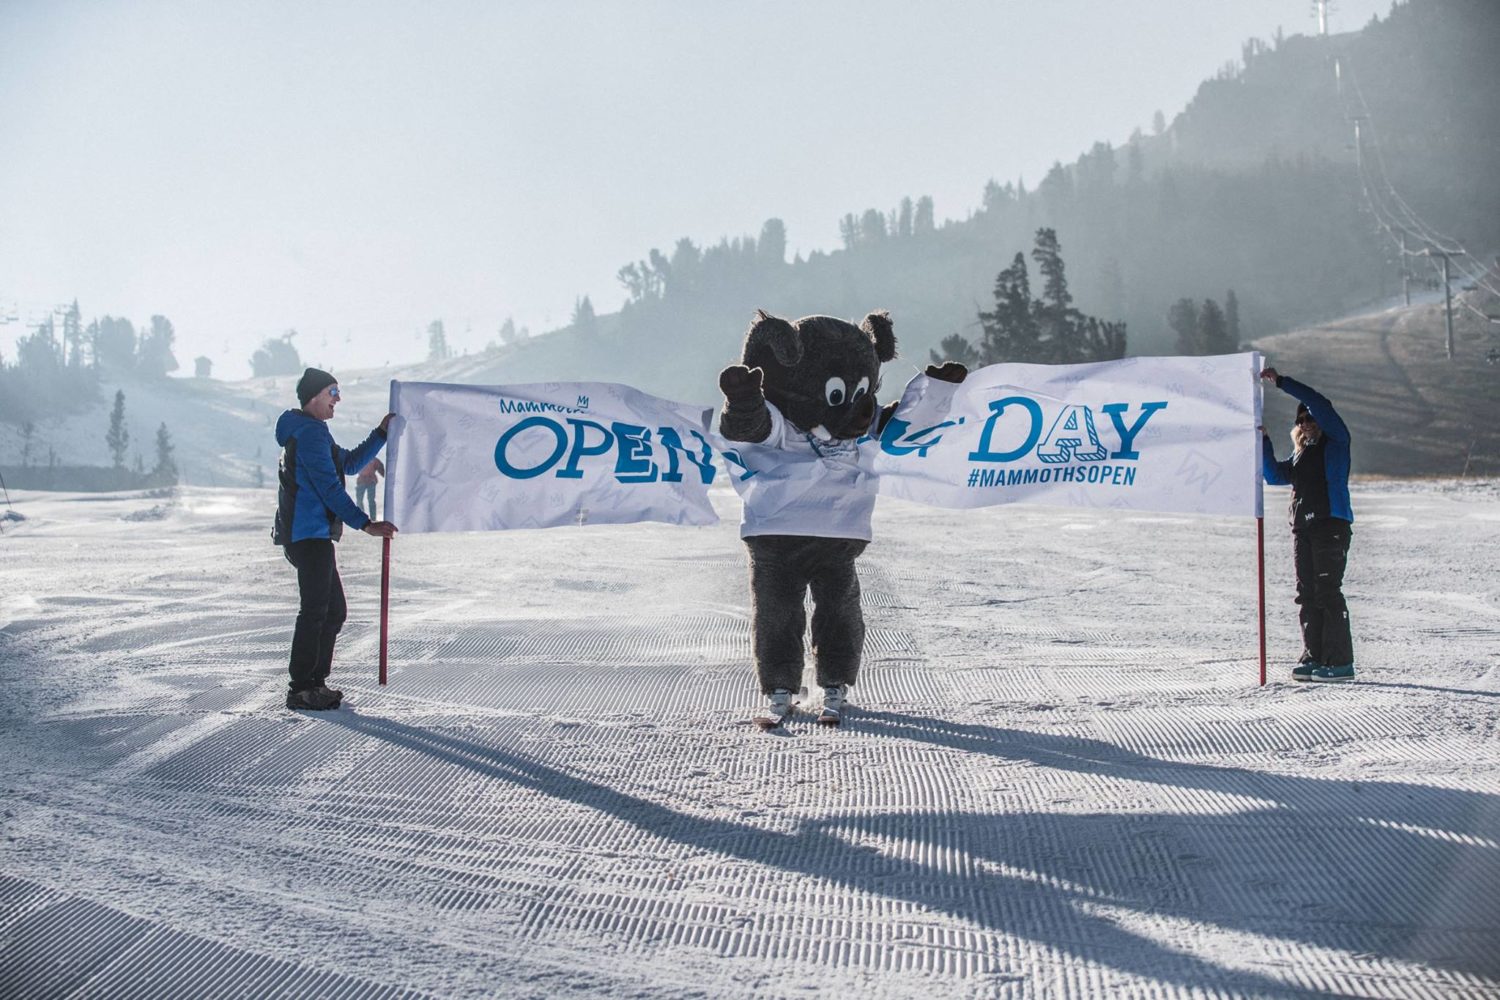 Mammoth opening day, opening day, ski resort opening day, mammoth opens